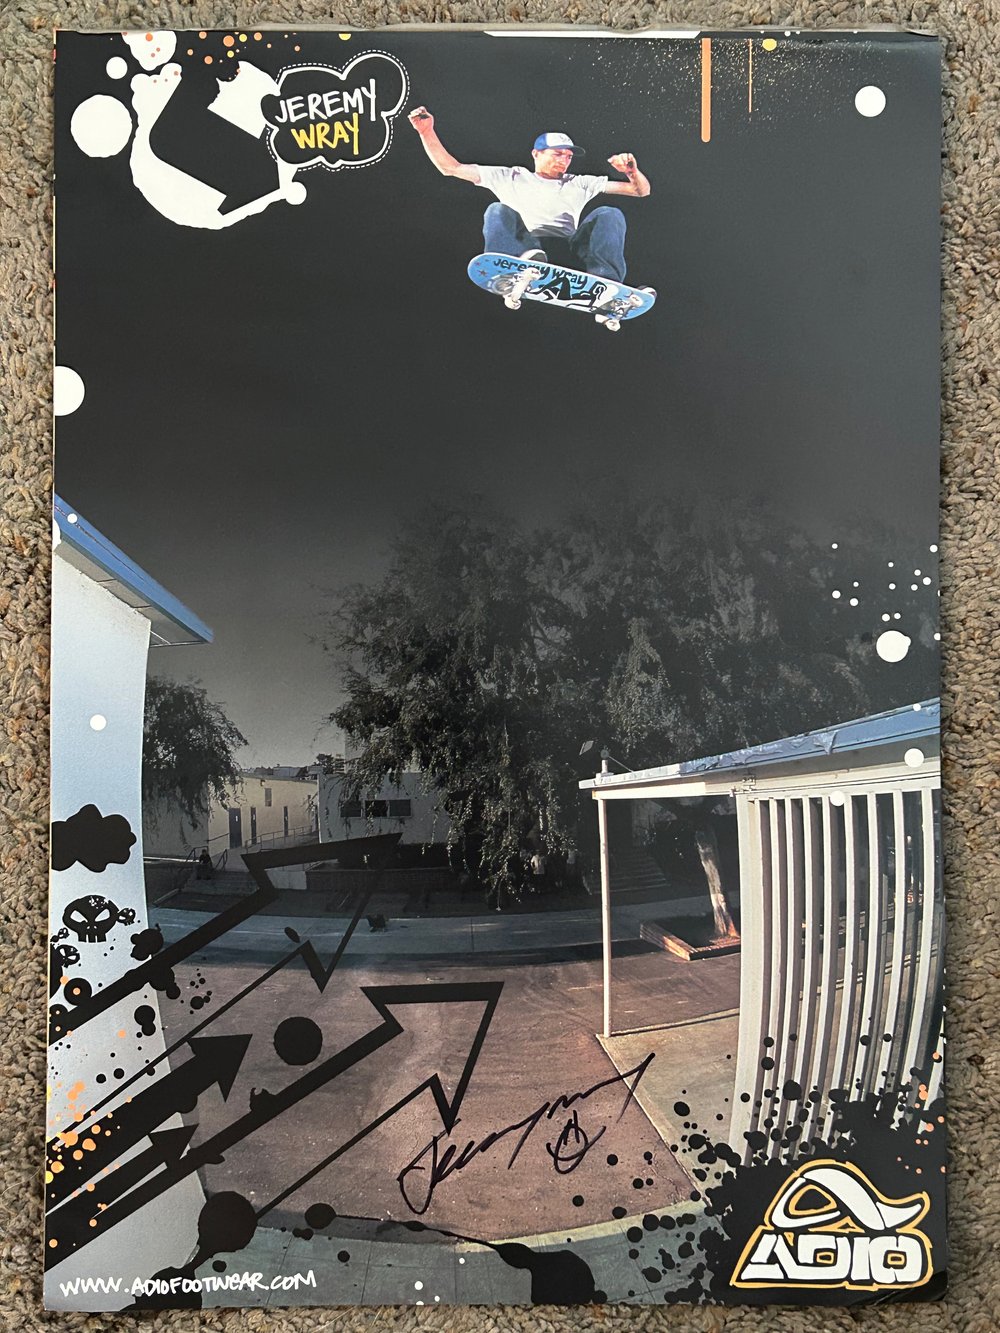 Signed, Double-Sided Vintage Skate Poster